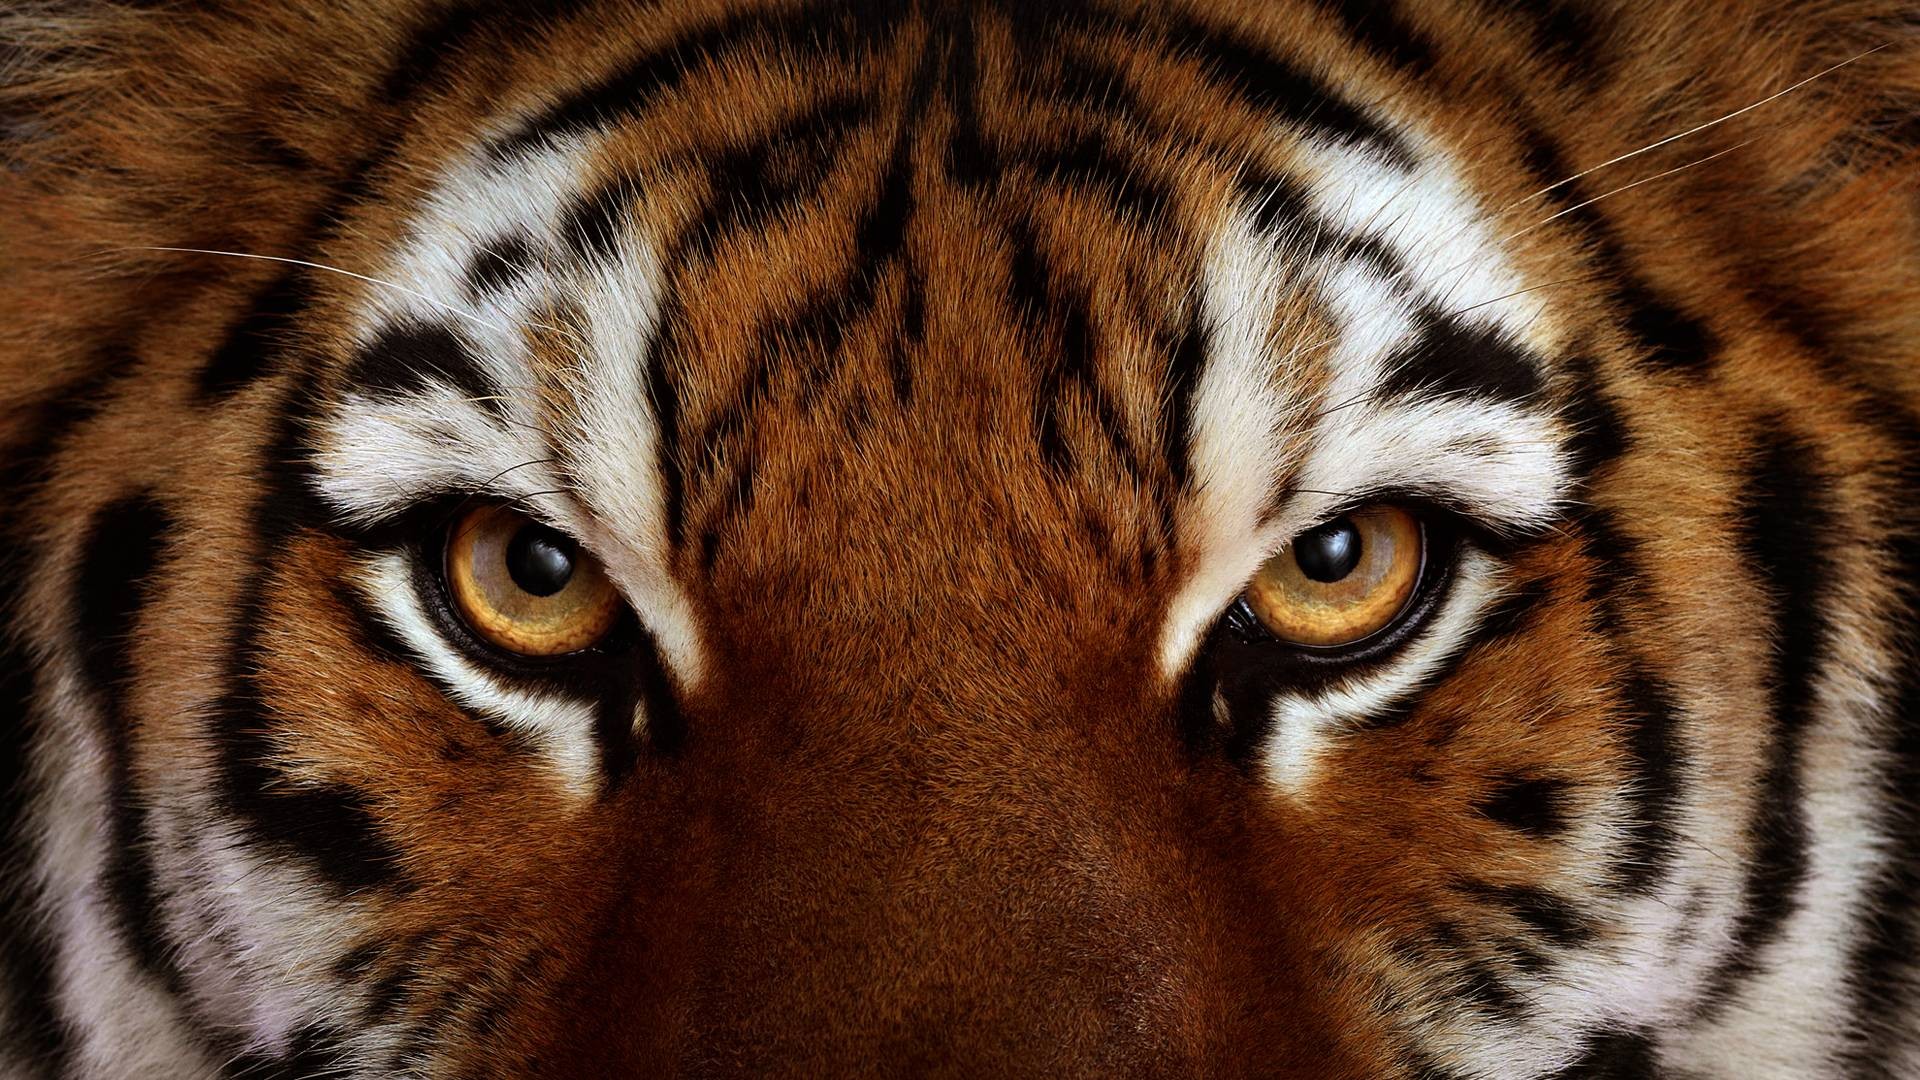 Wallpaper Tiger's eyes, close up